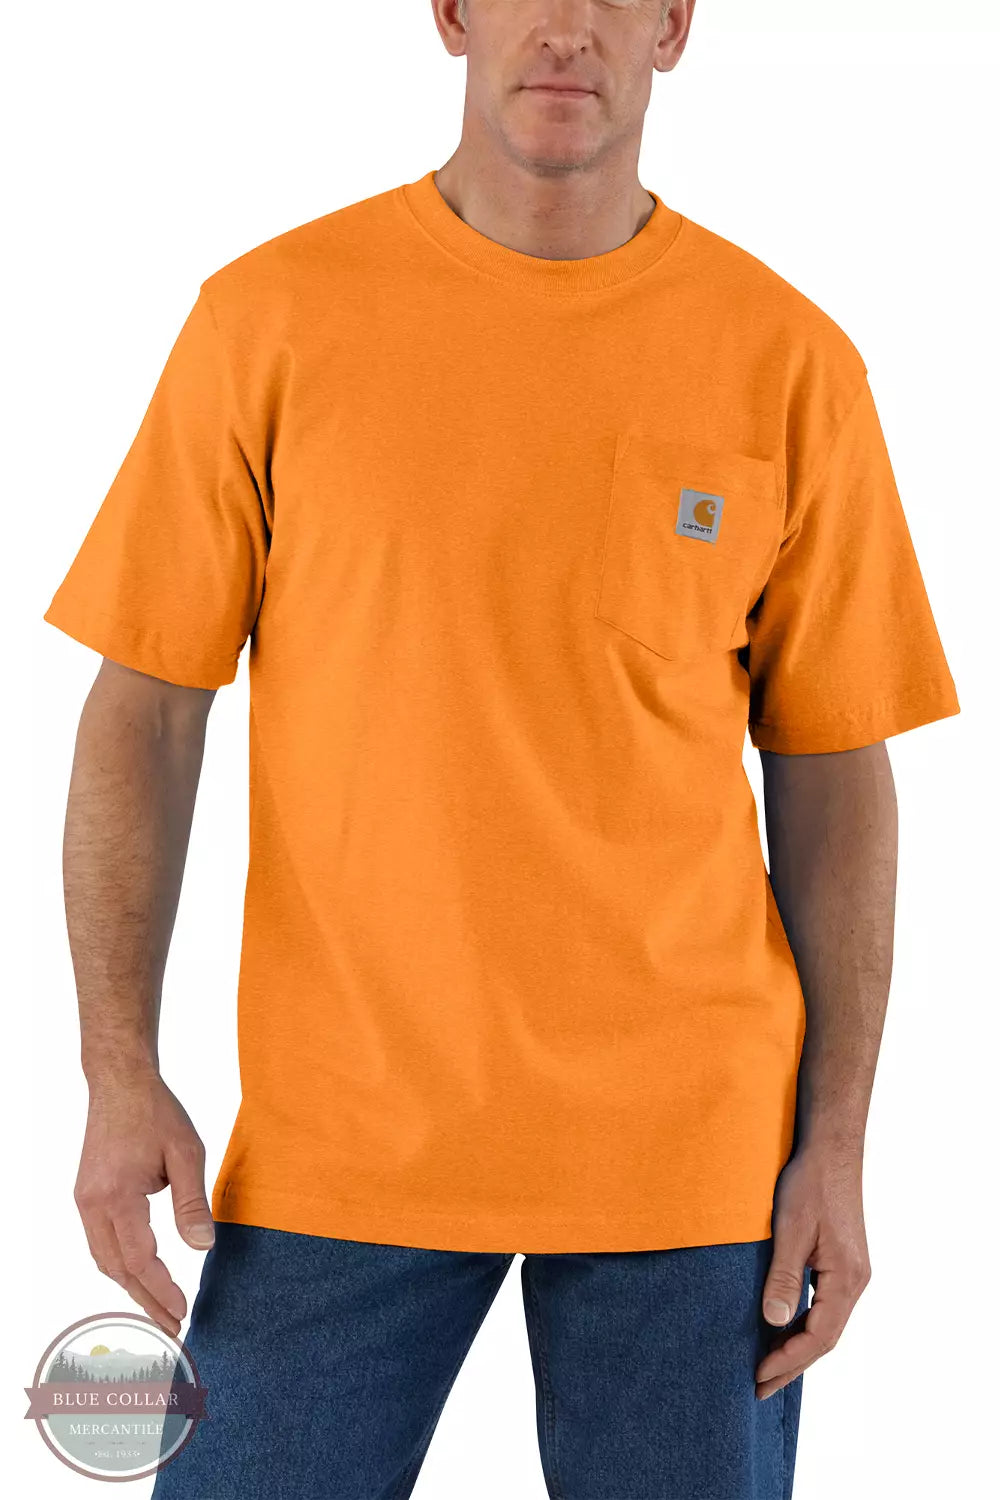 Carhartt K87 Loose Fit Heavyweight Short Sleeve T-Shirt Fall Season Marmalade Heather Front View